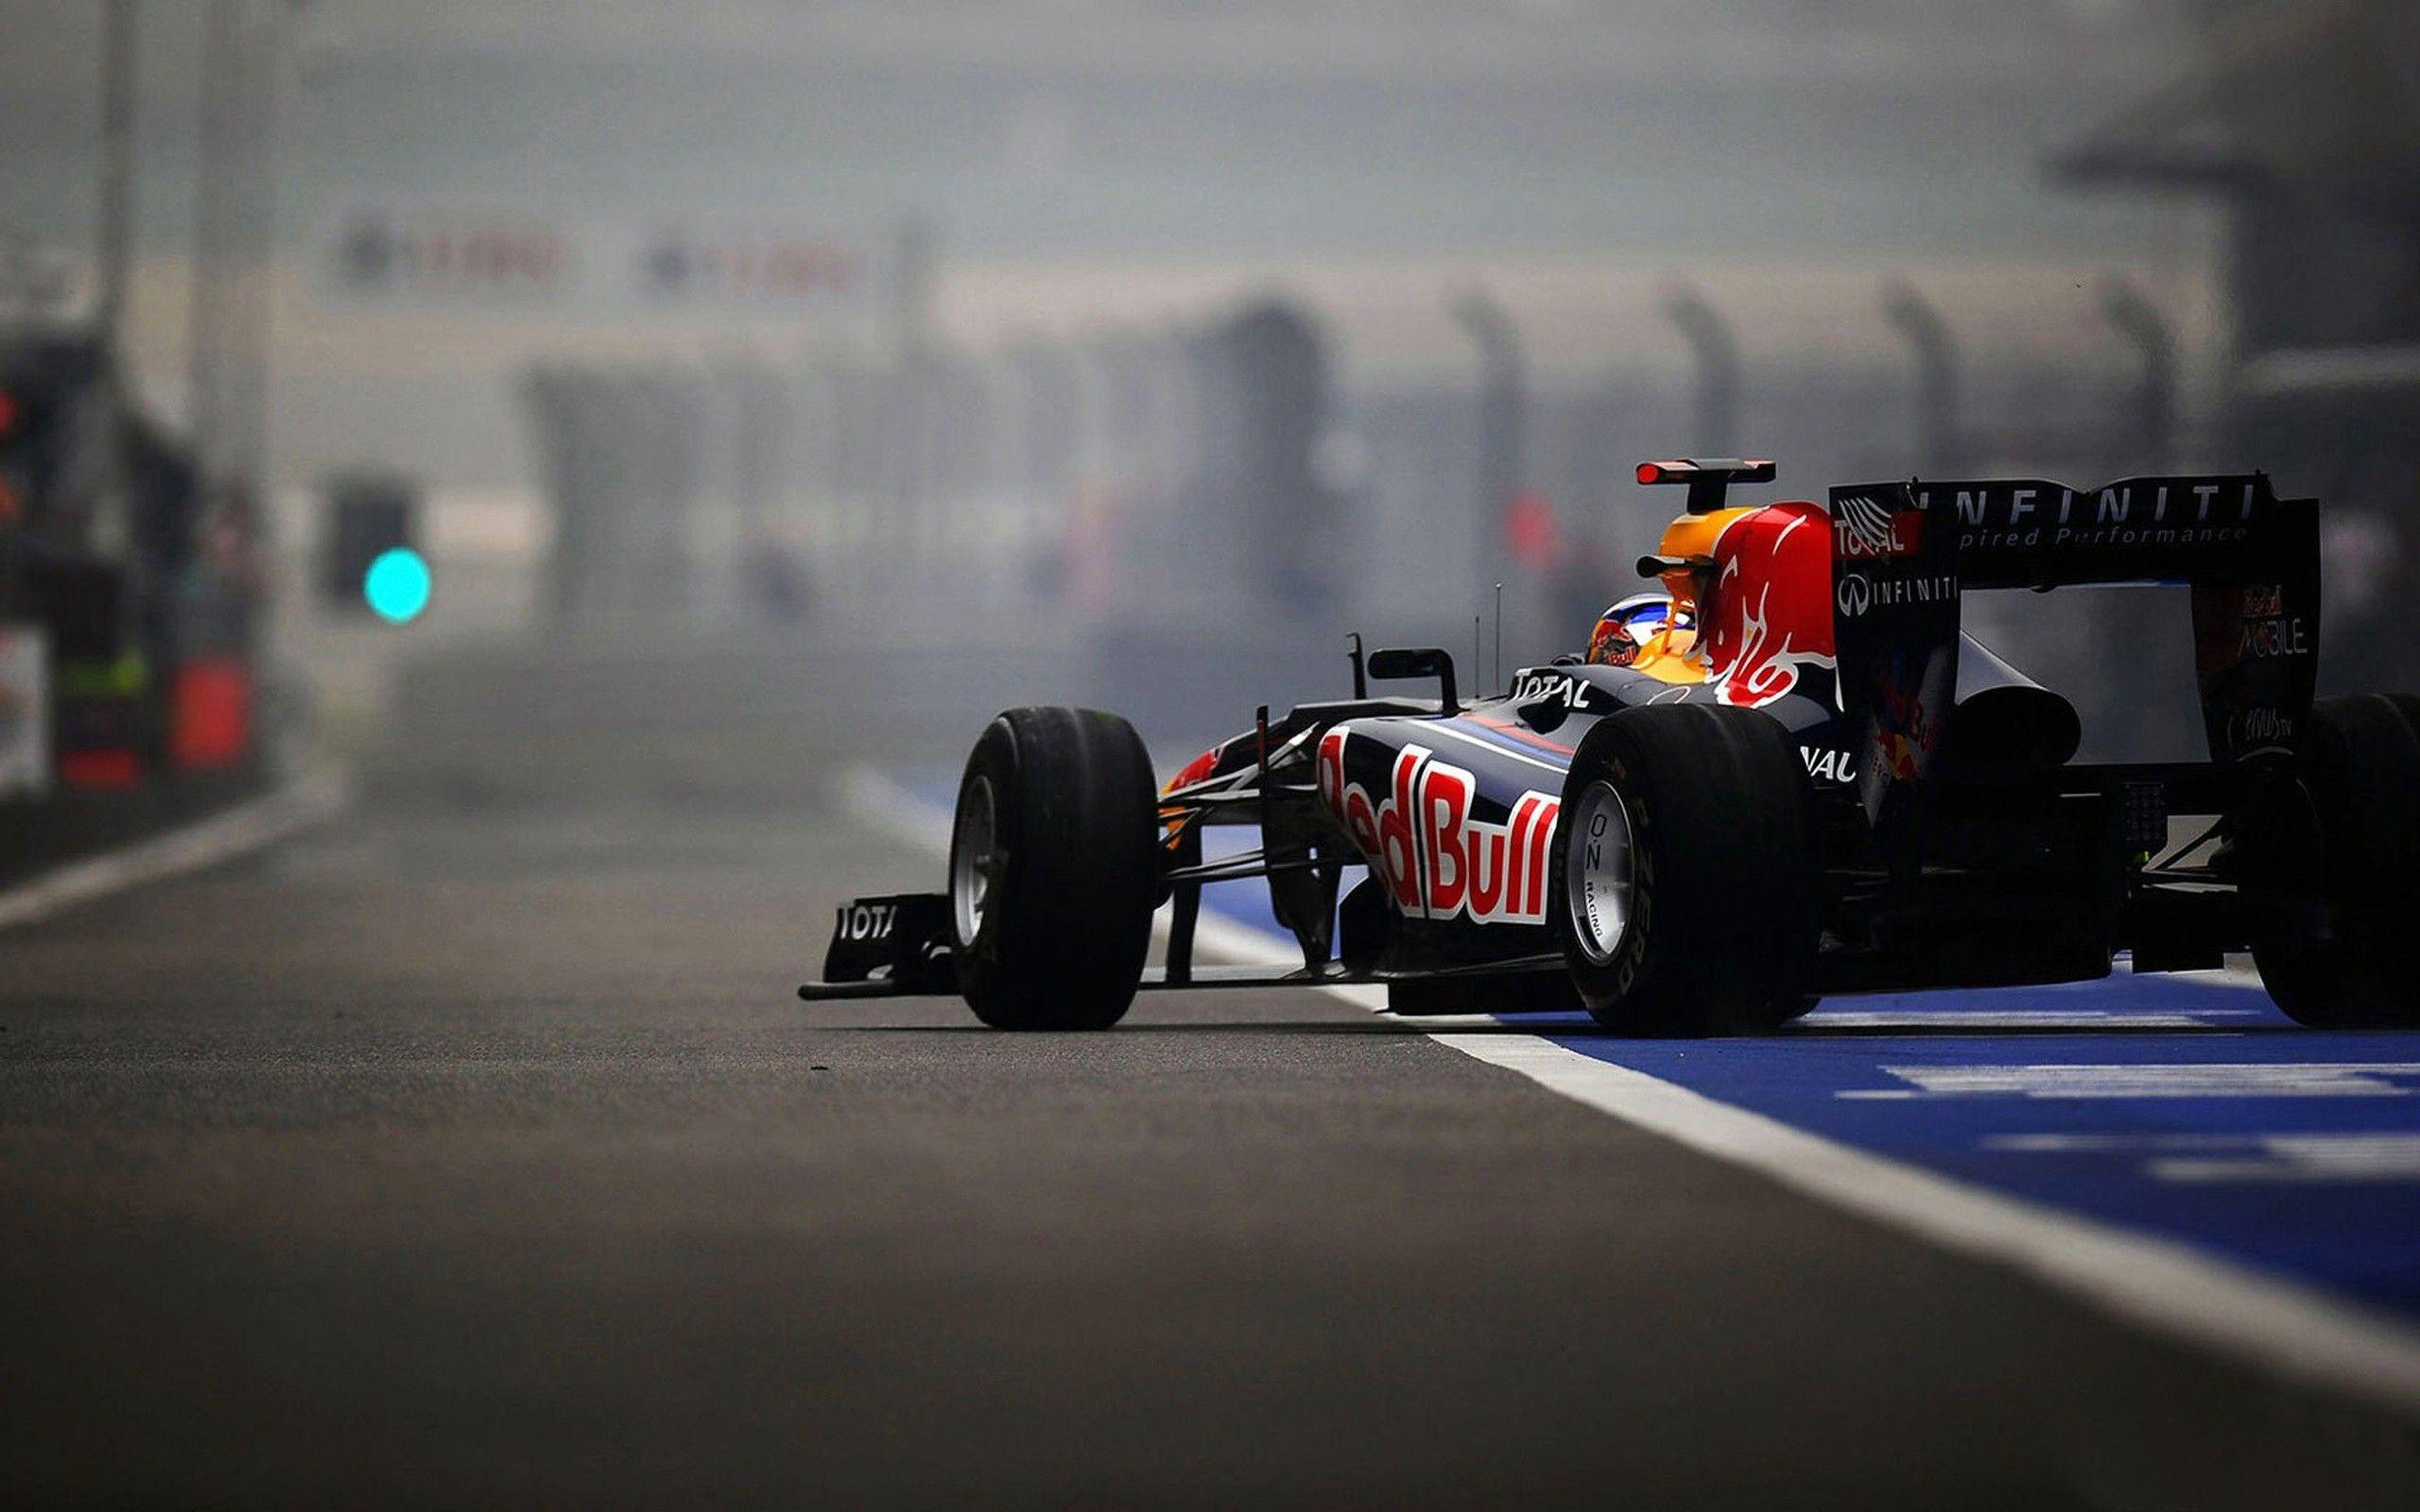 Infinity Red Bull Formel 1 Auto Hintergrundbilder. Infinity Red